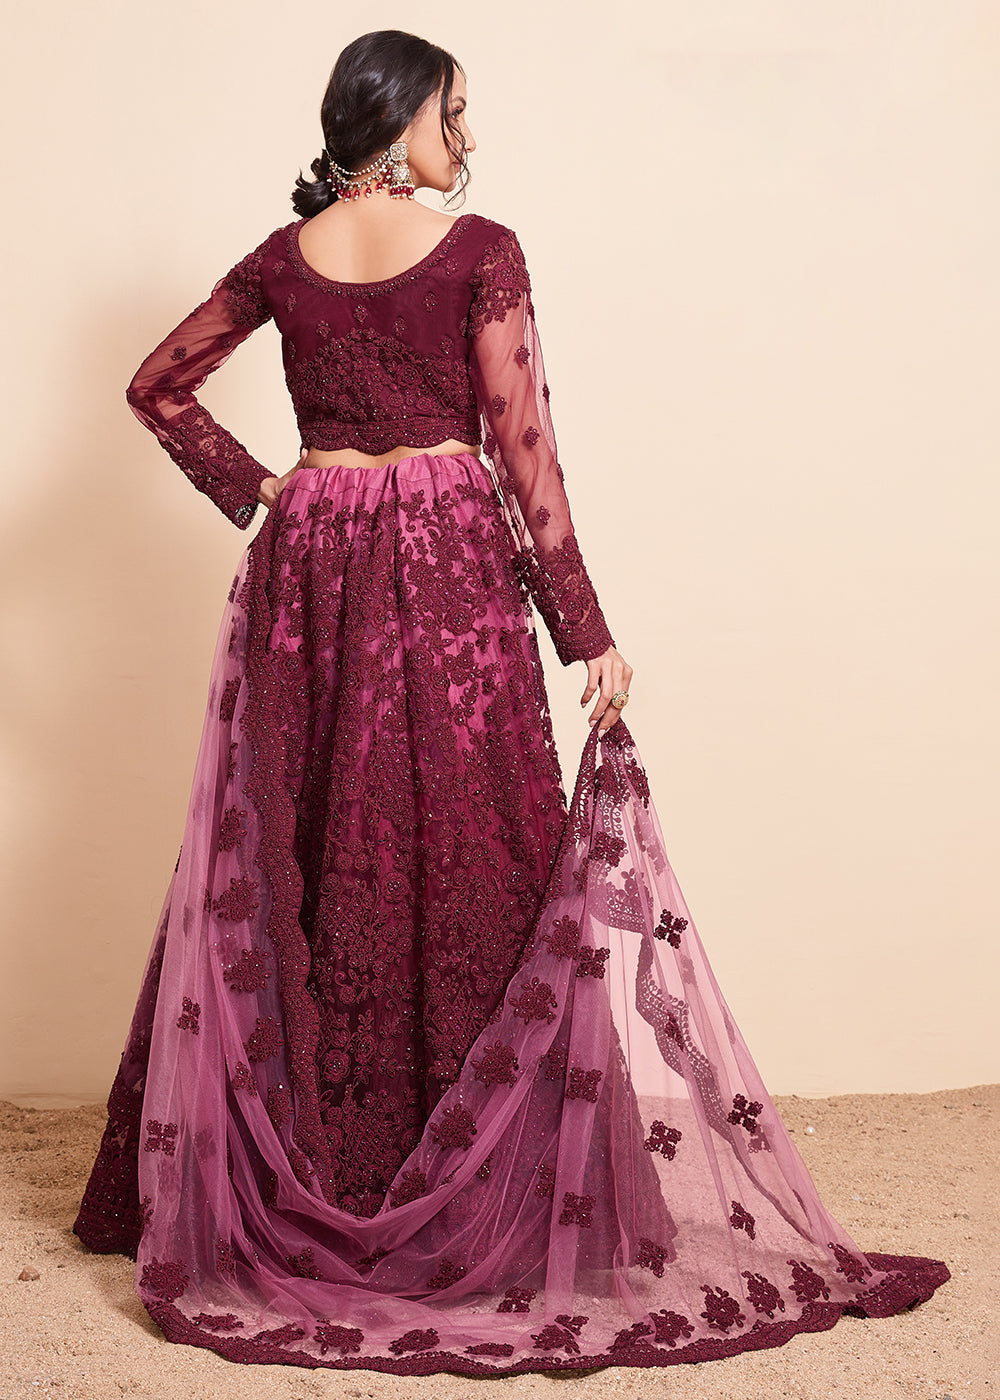 Buy Now Shaded Magenta Beautifully Heavy Embroidered Bridal Lehenga Choli Online in USA, UK, Canada & Worldwide at Empress Clothing.